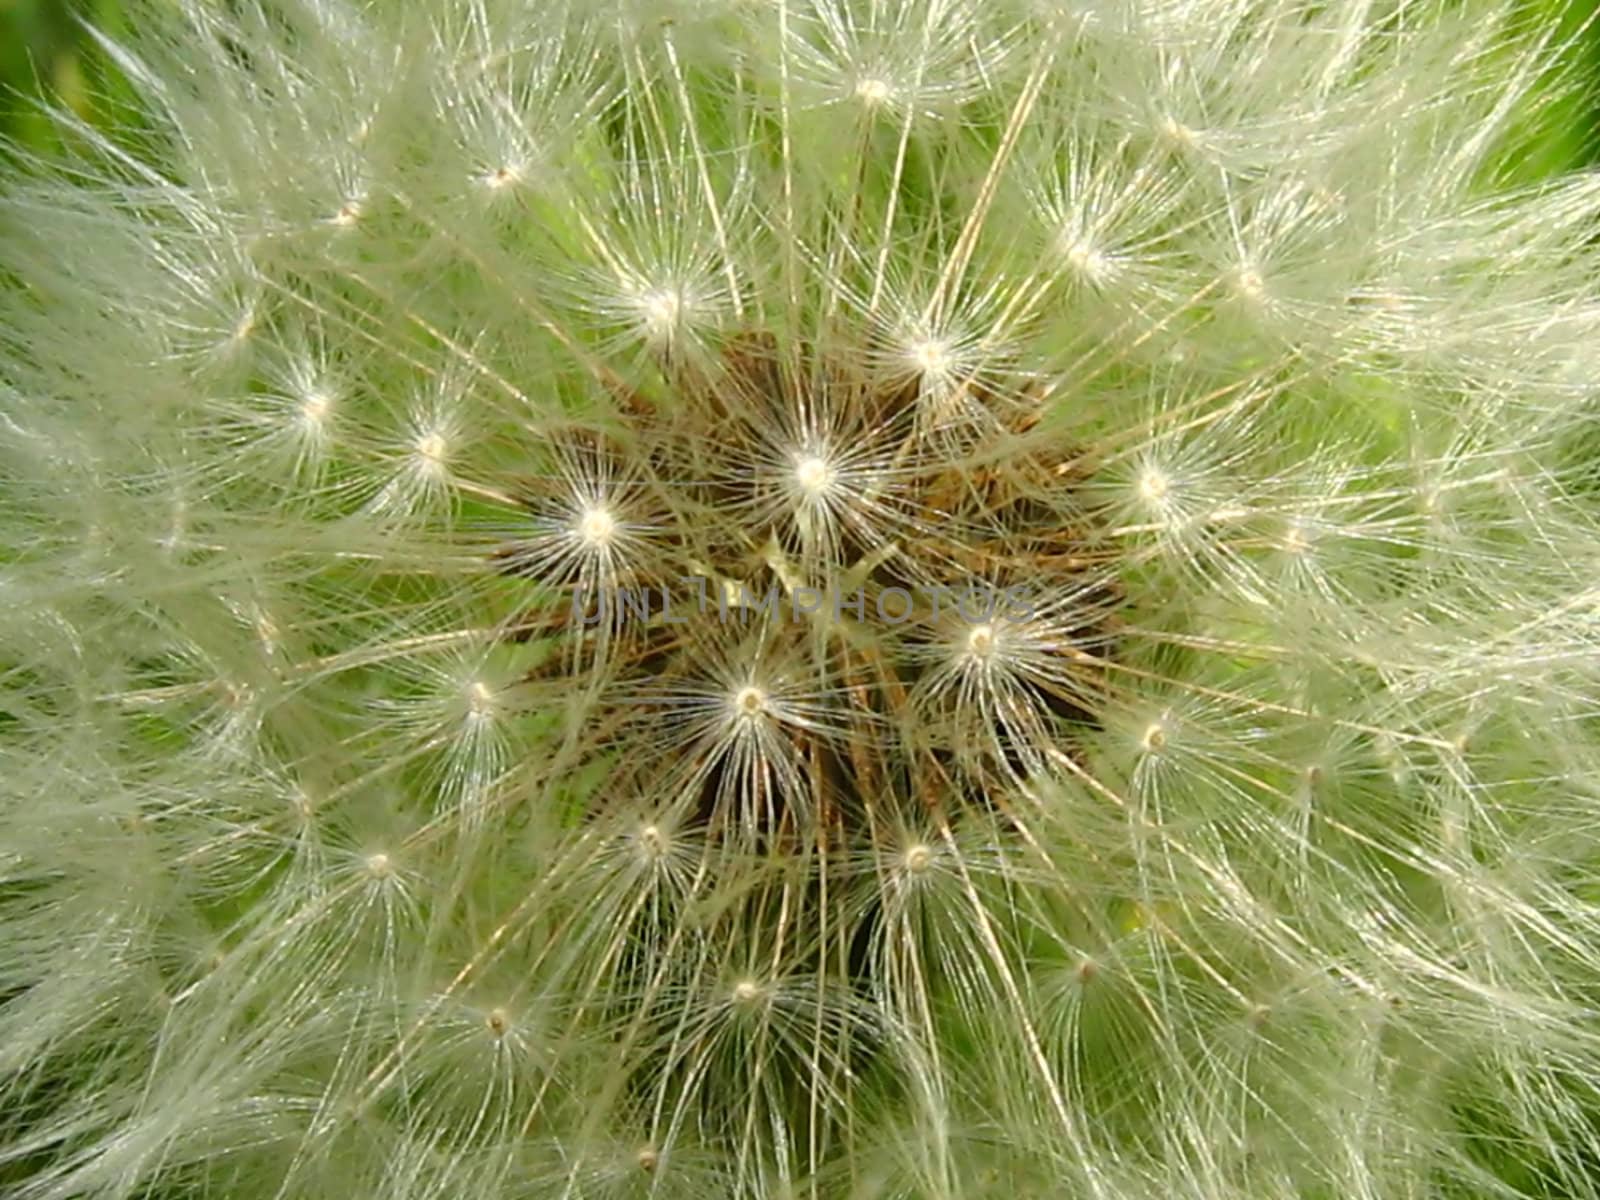 Dandelion Flower Seeds by llyr8